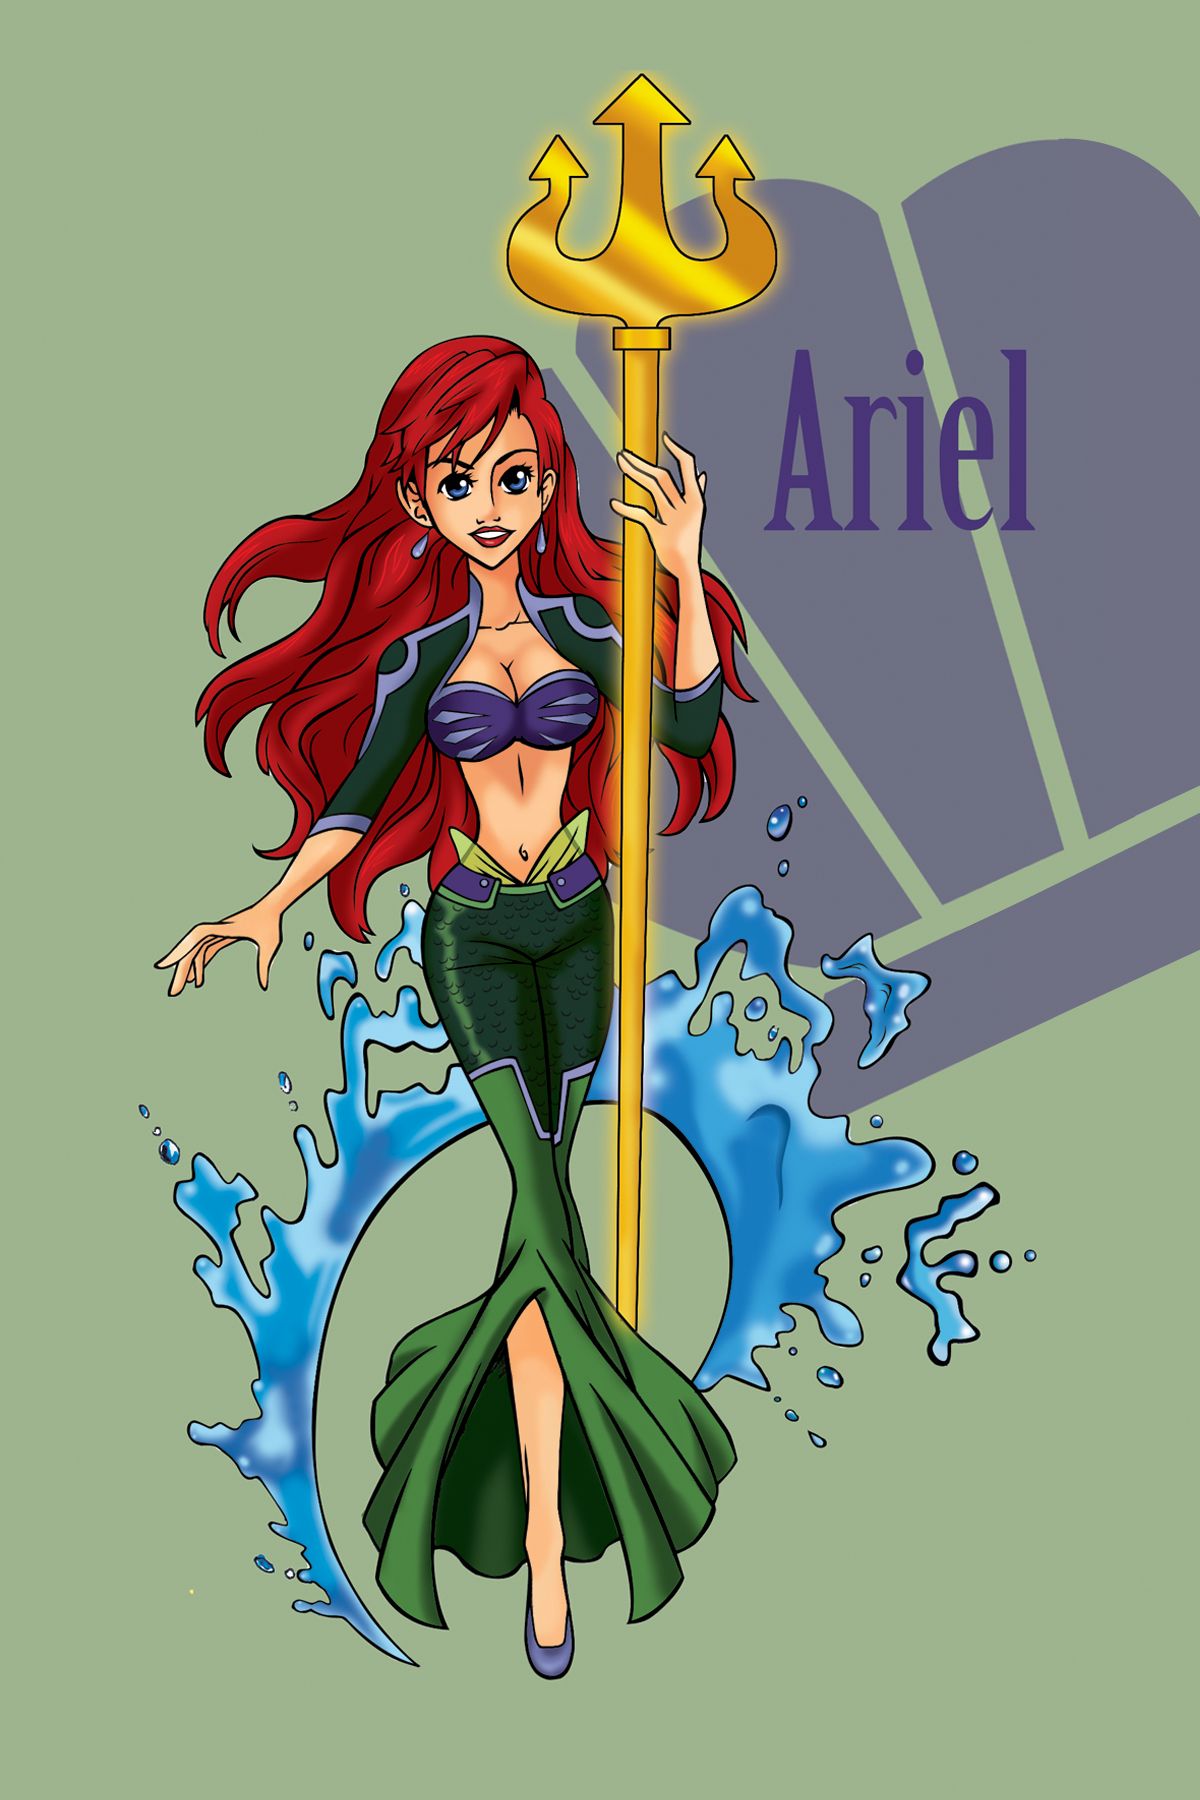 Ariel The Superhero By Byakko-777 On Deviant Art